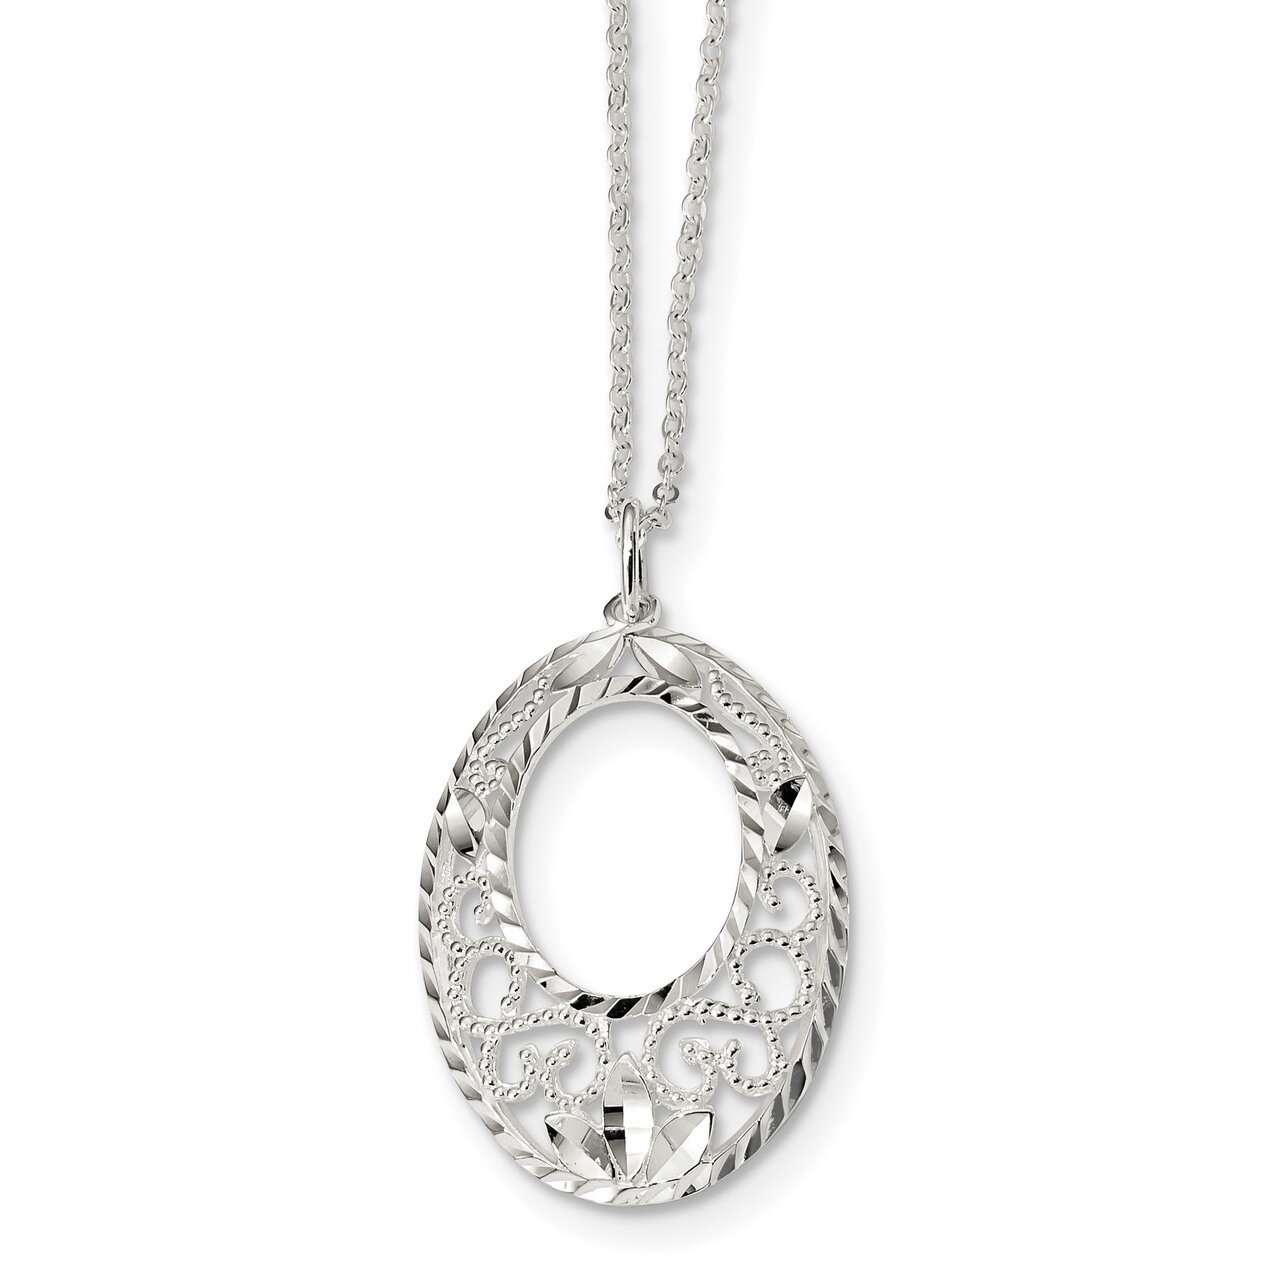 Open Oval Filigree Necklace 17 Inch Sterling Silver Diamond Cut QG4536-17